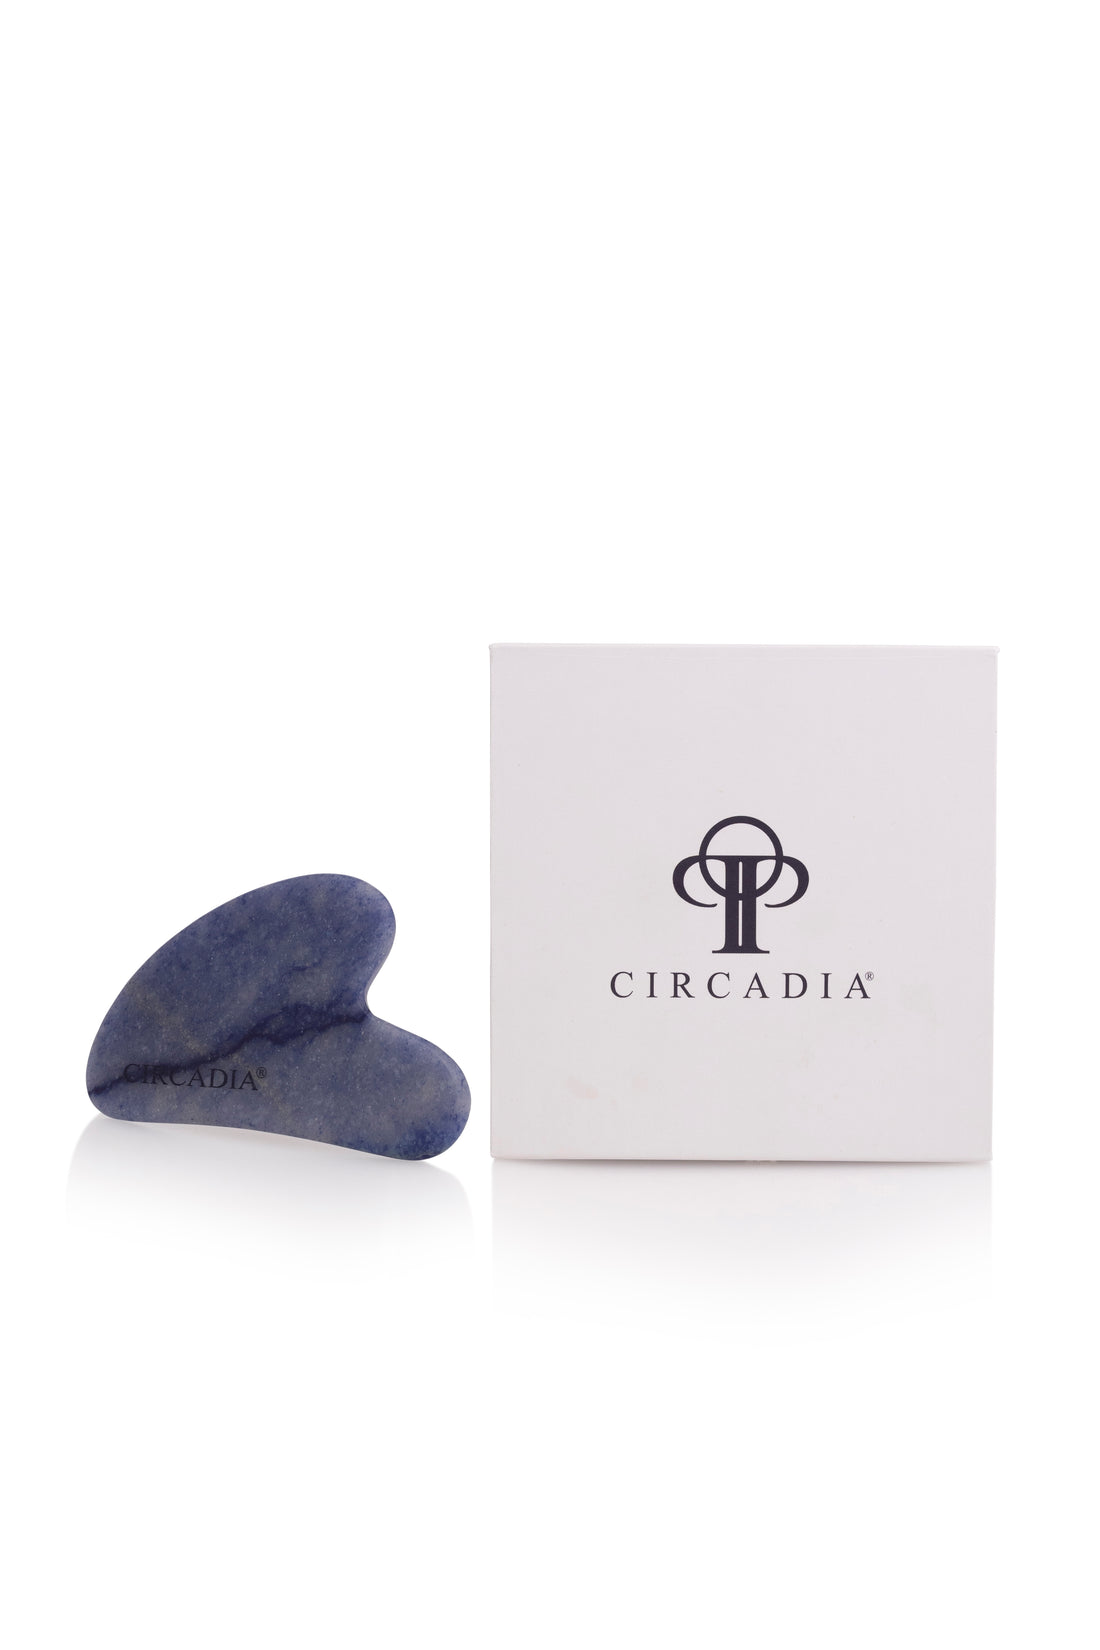 Circadia Blue Stone Gua Sha